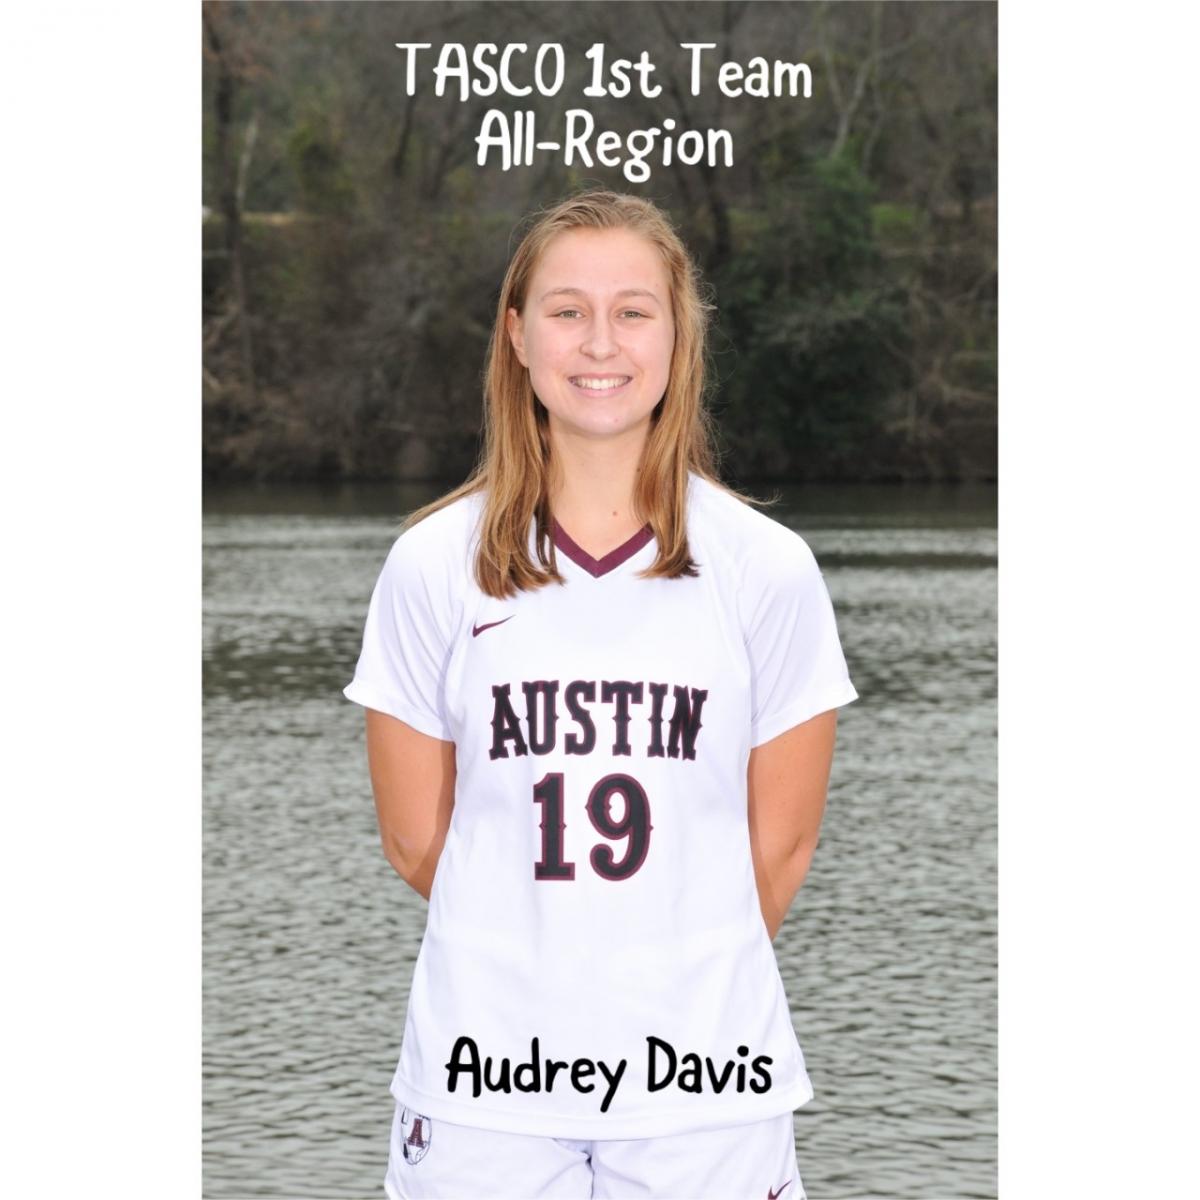 Audrey Davis named to TASCO All-Region Team 